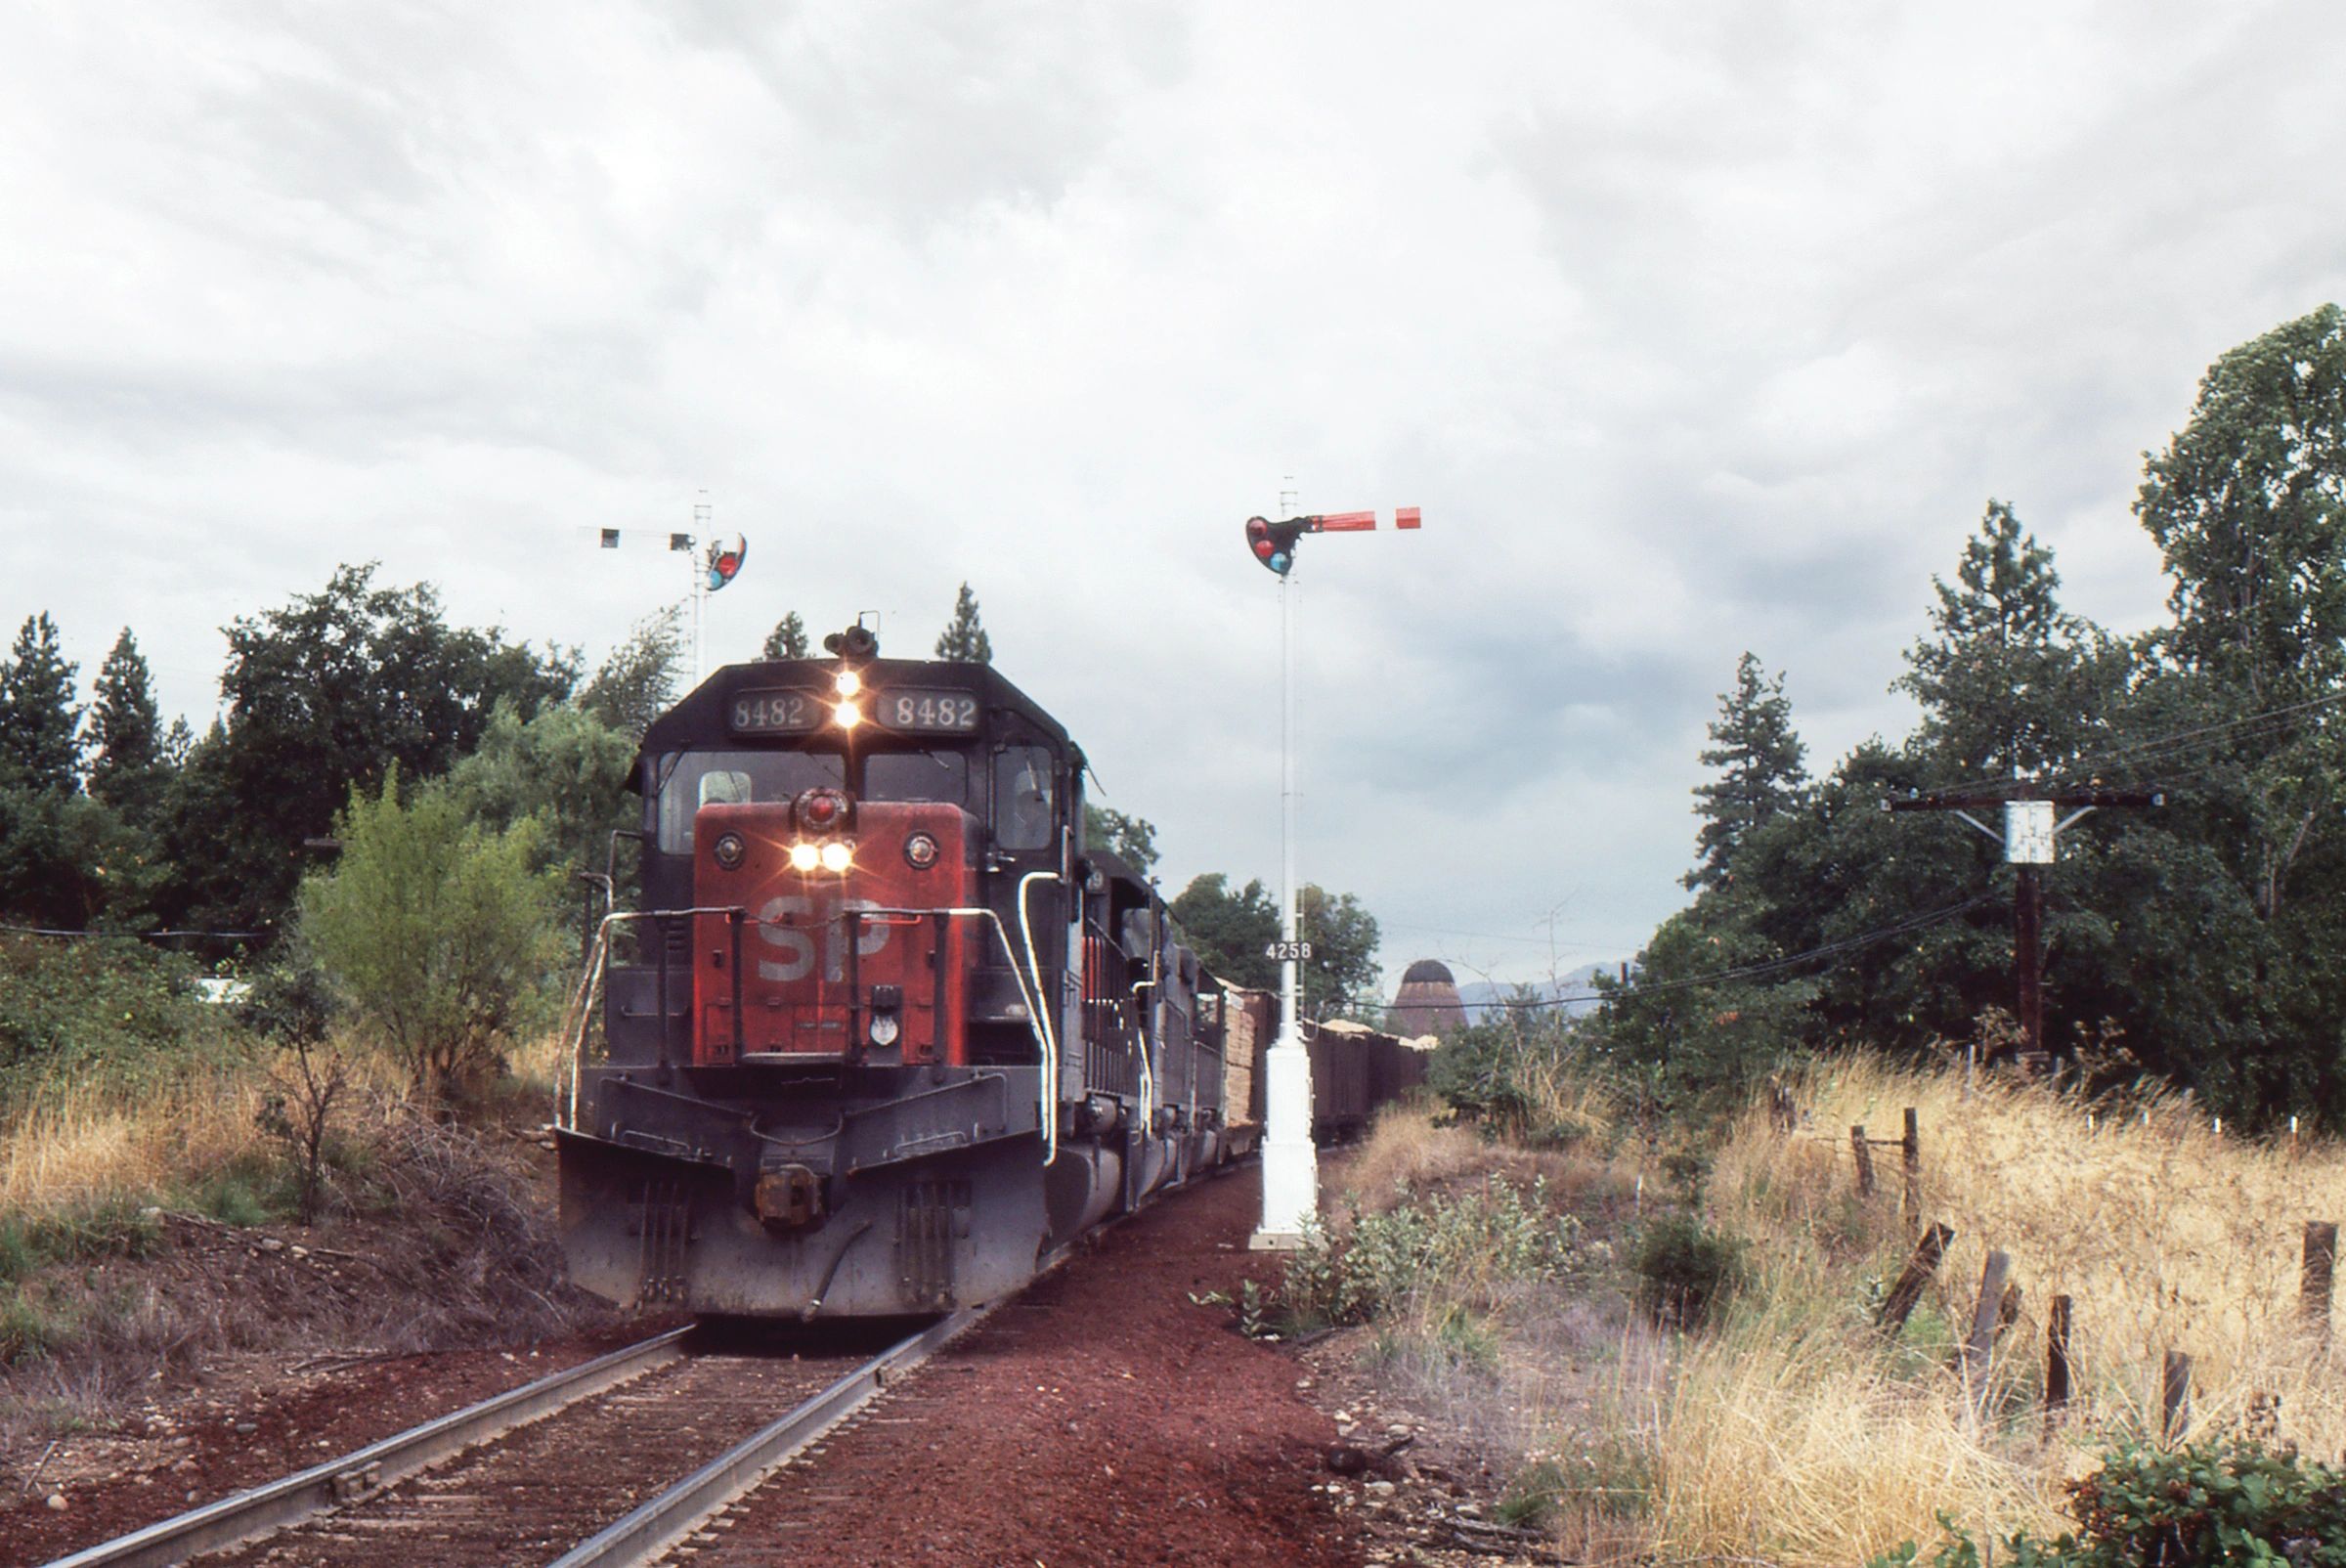 A train moving on a railroad